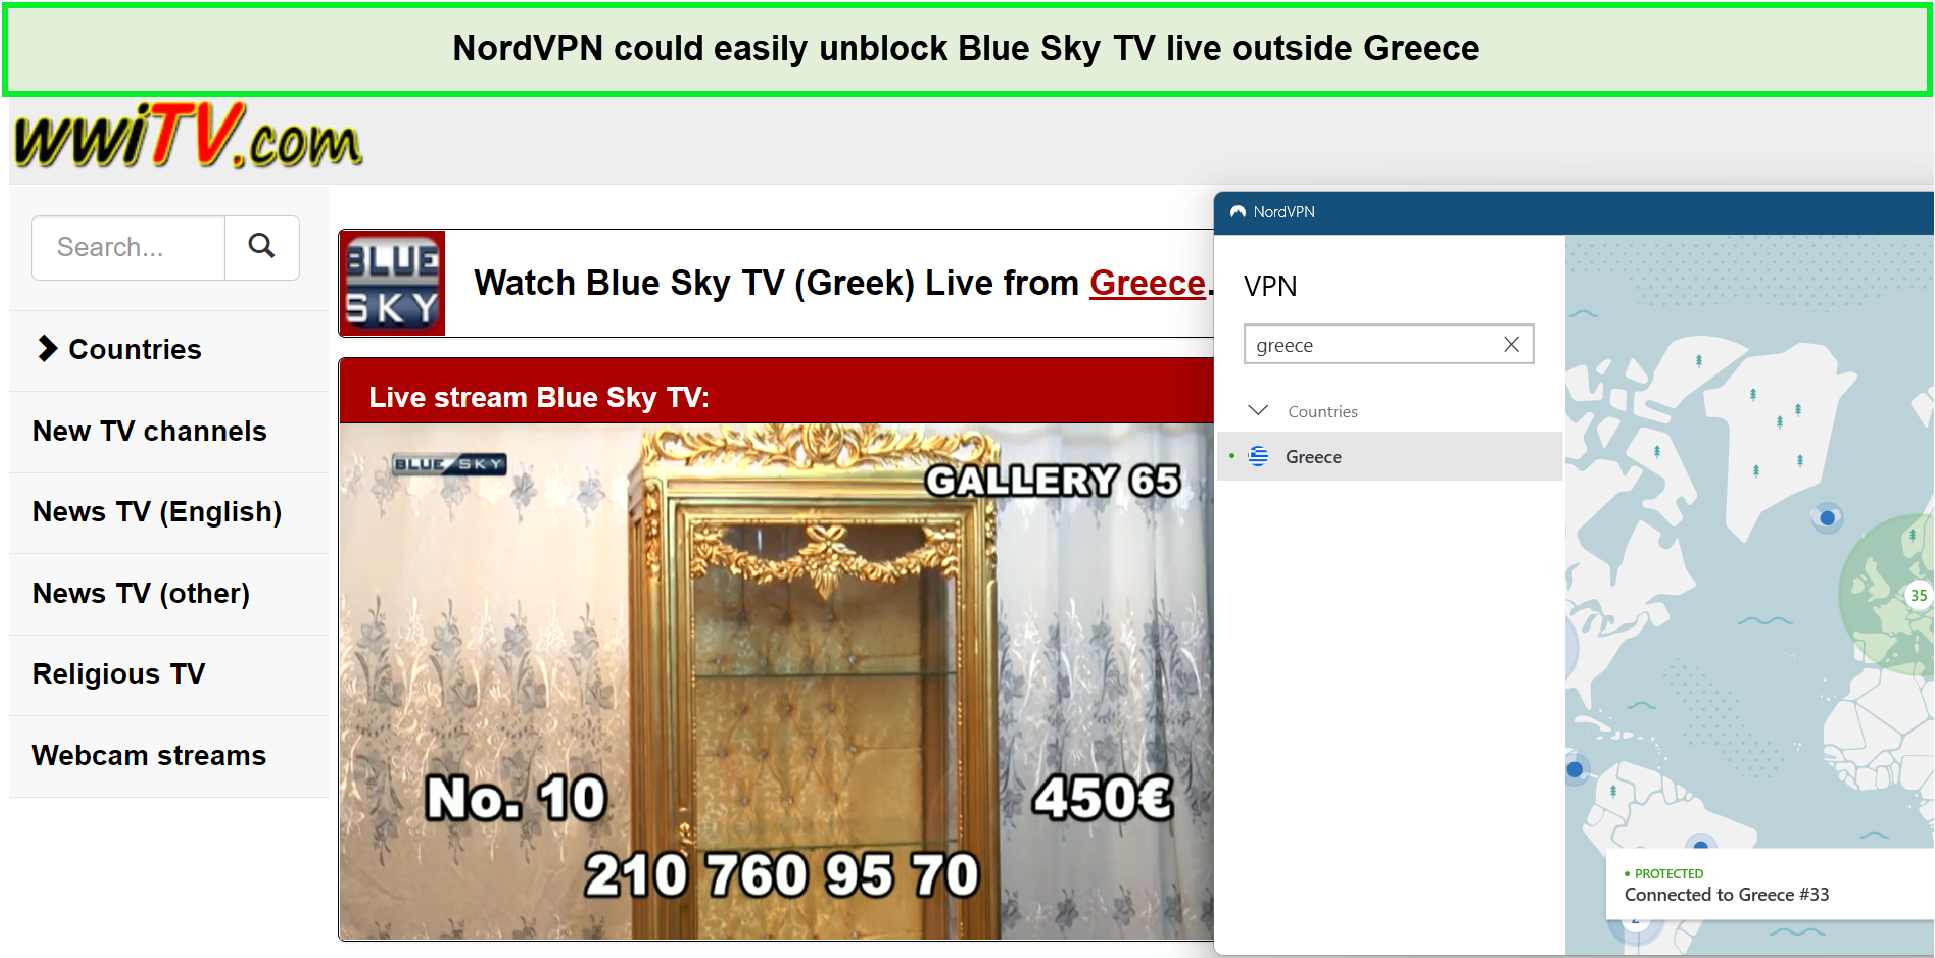 NordVPN-easily-unblock-Bly-Sky-TV-outside-Greece-For UAE Users